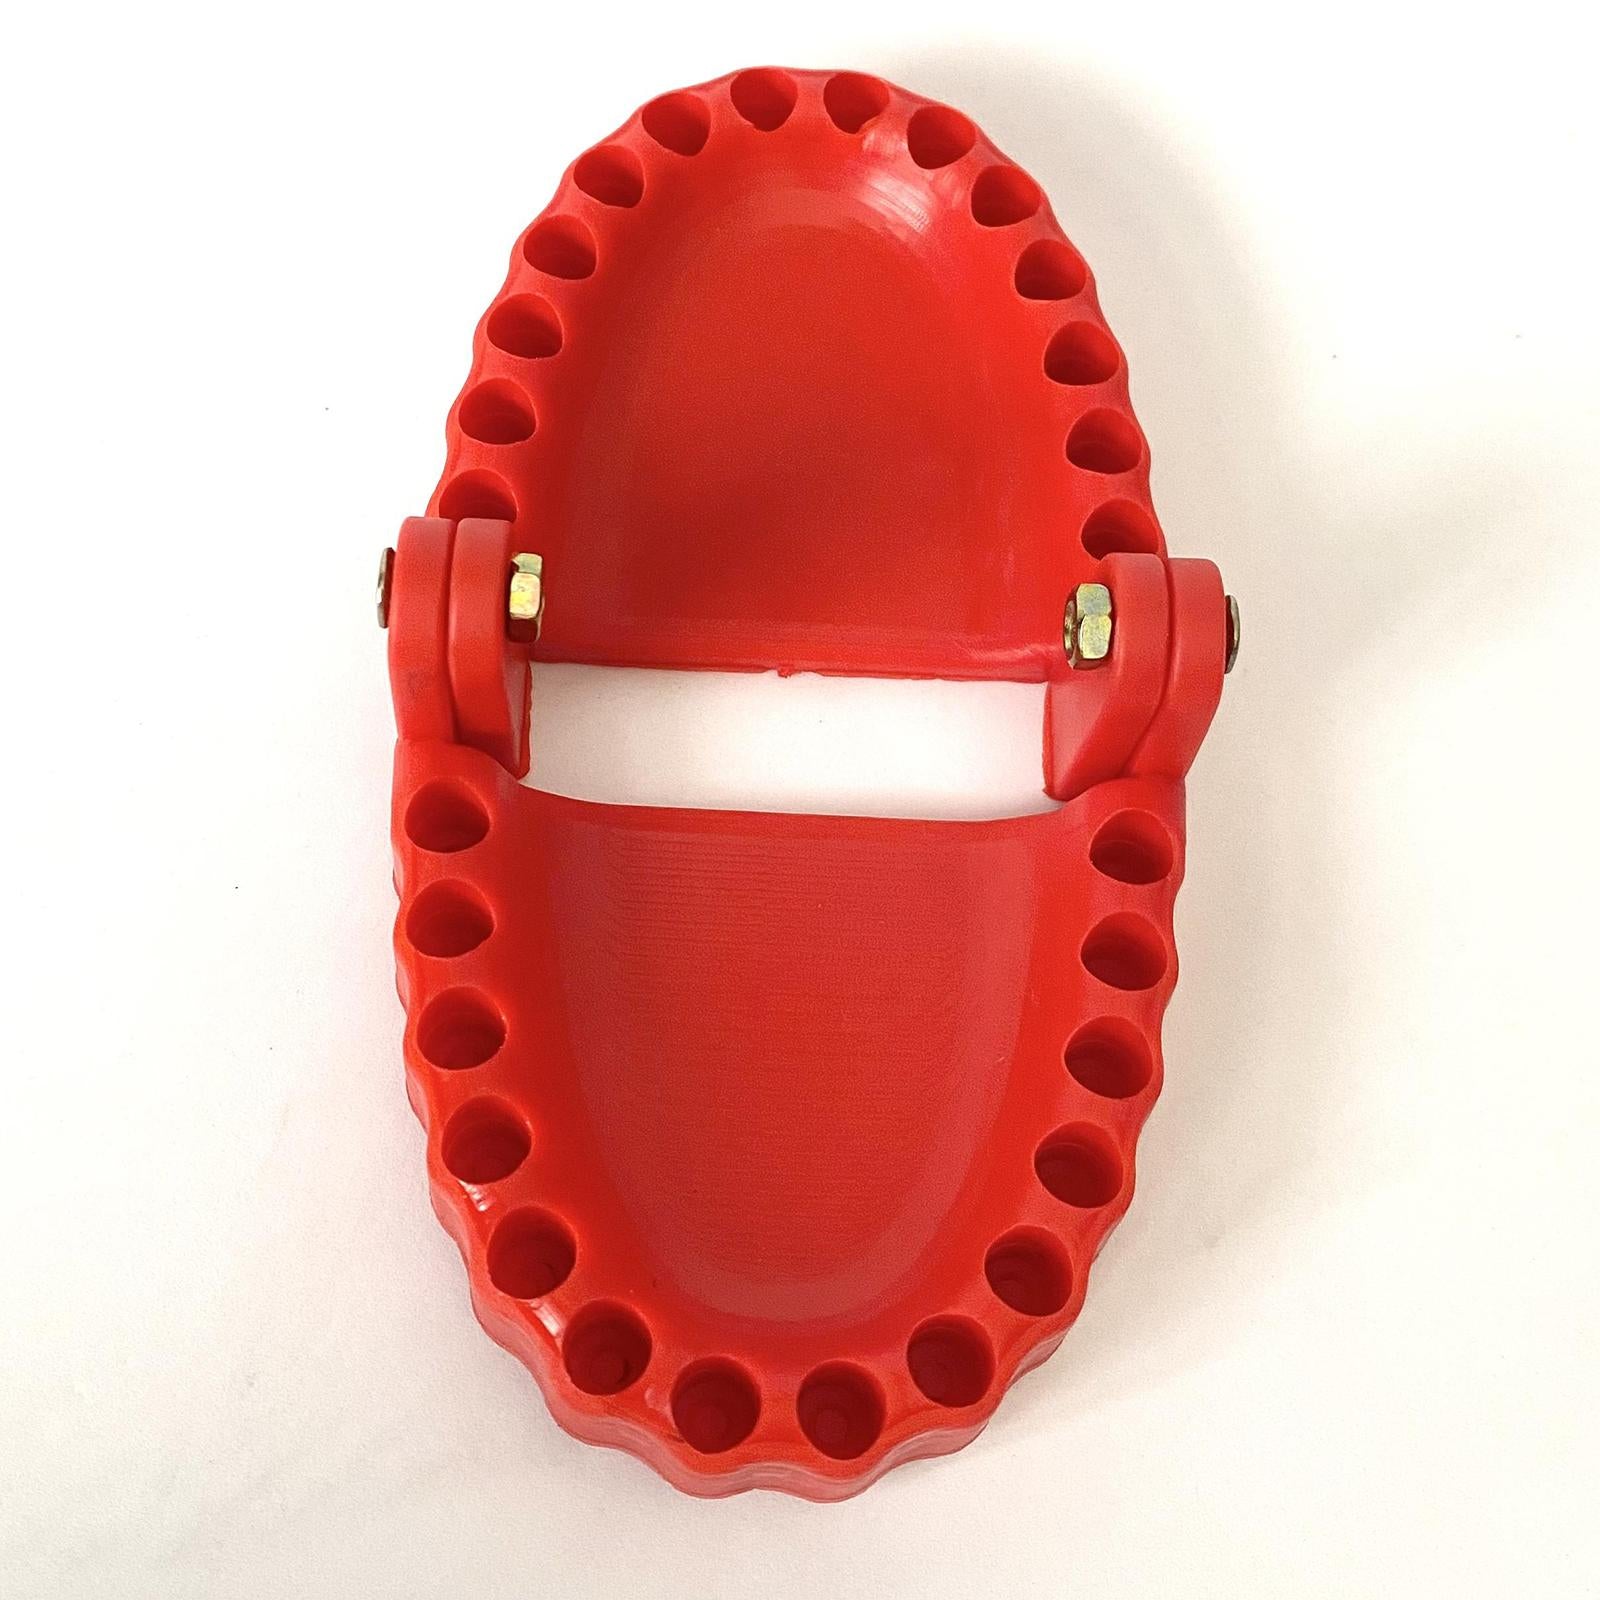 Denture Drill Bit Holder Teeth Model Design for Home Improvement Supplies